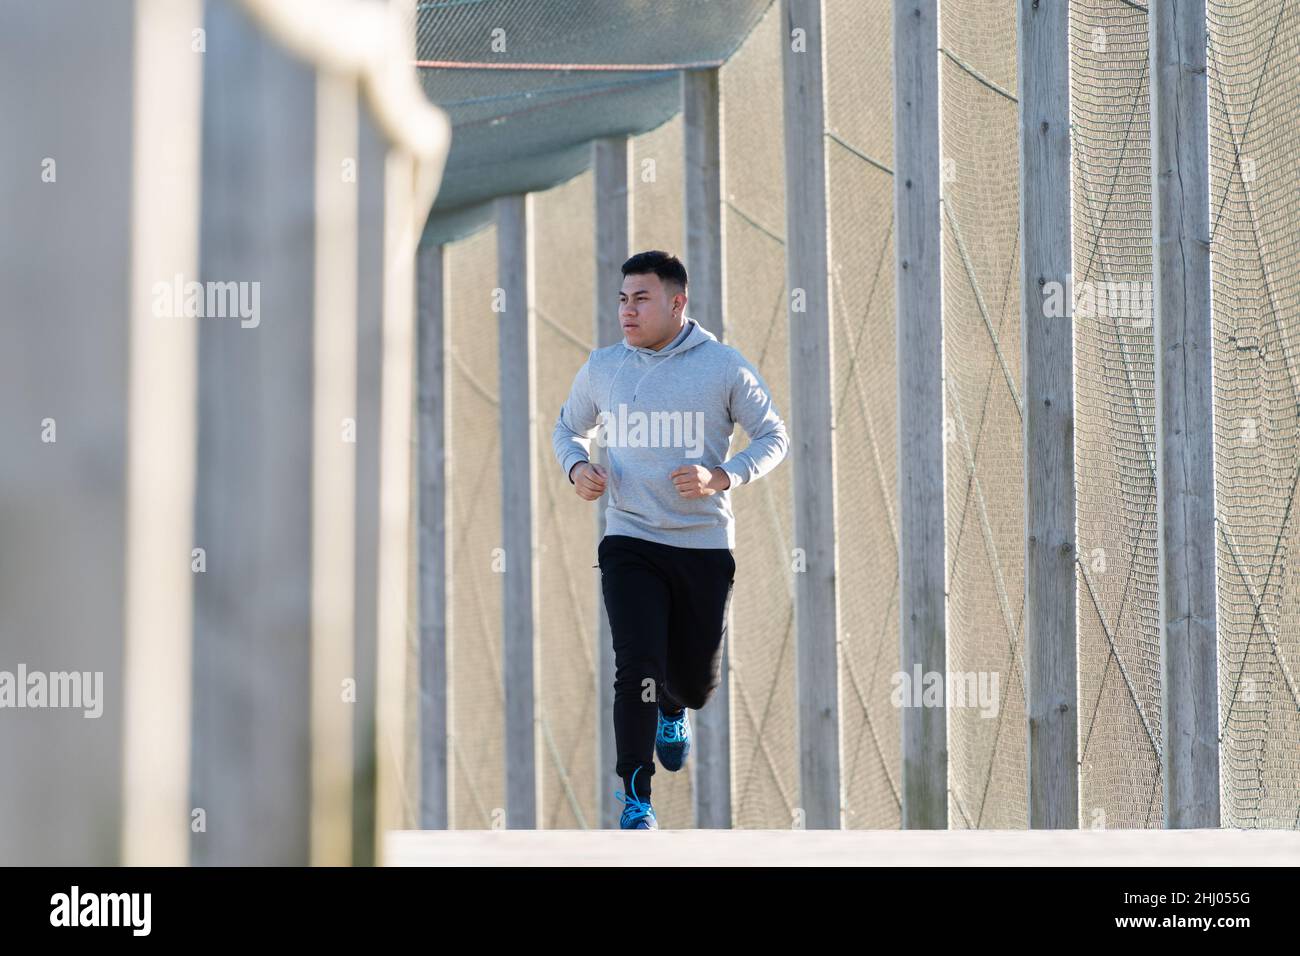 Lating athlete running through a promenade Stock Photo